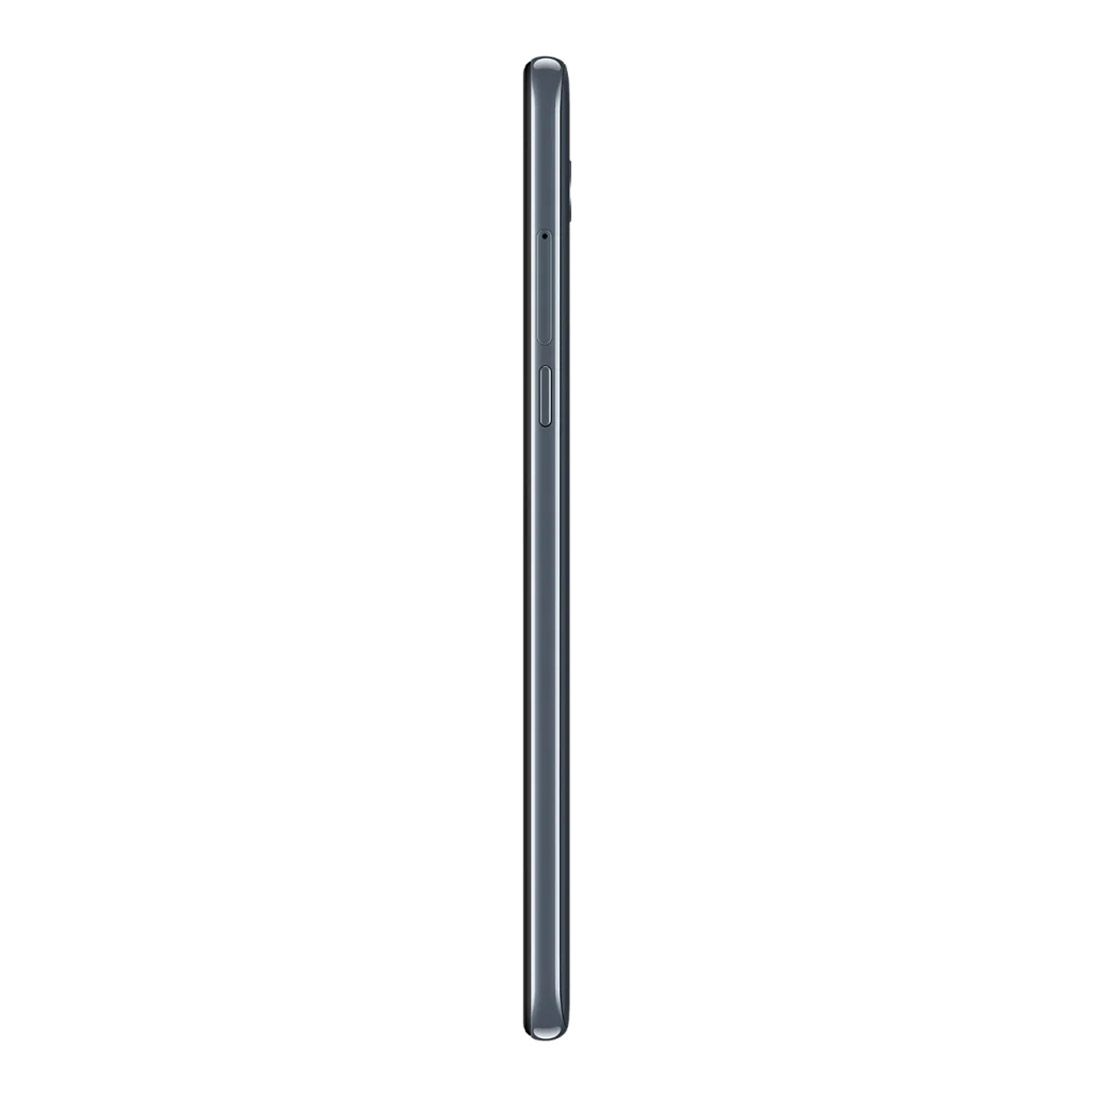 LG K61 Dual SIM 4G 128GB/4GB (48MP Quad Camera) - Titan Grey